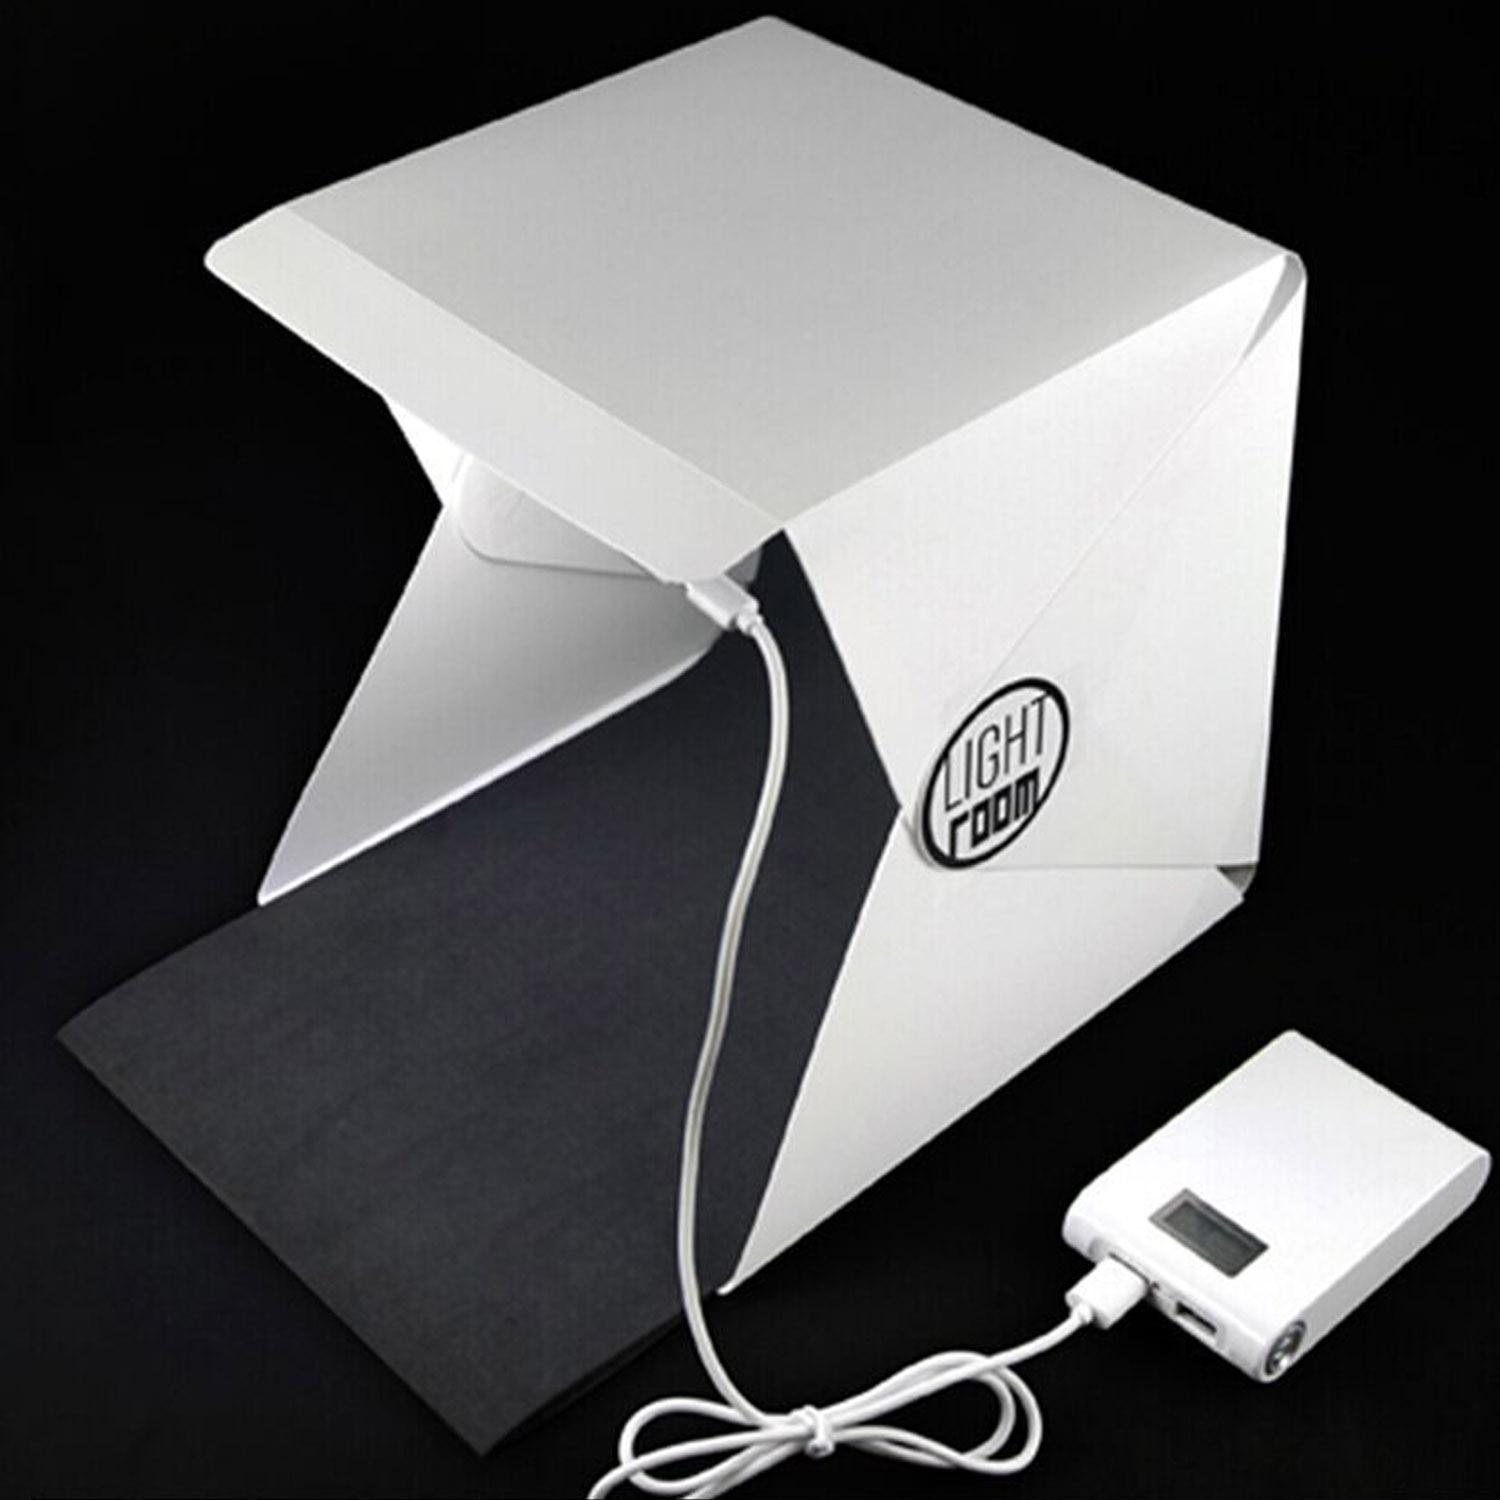 Gosear Opvouwbare Mini LED Photo Studio Schieten Fotografie Light Box Tent met 2 STUKS Achtergronden Micro Usb-kabel